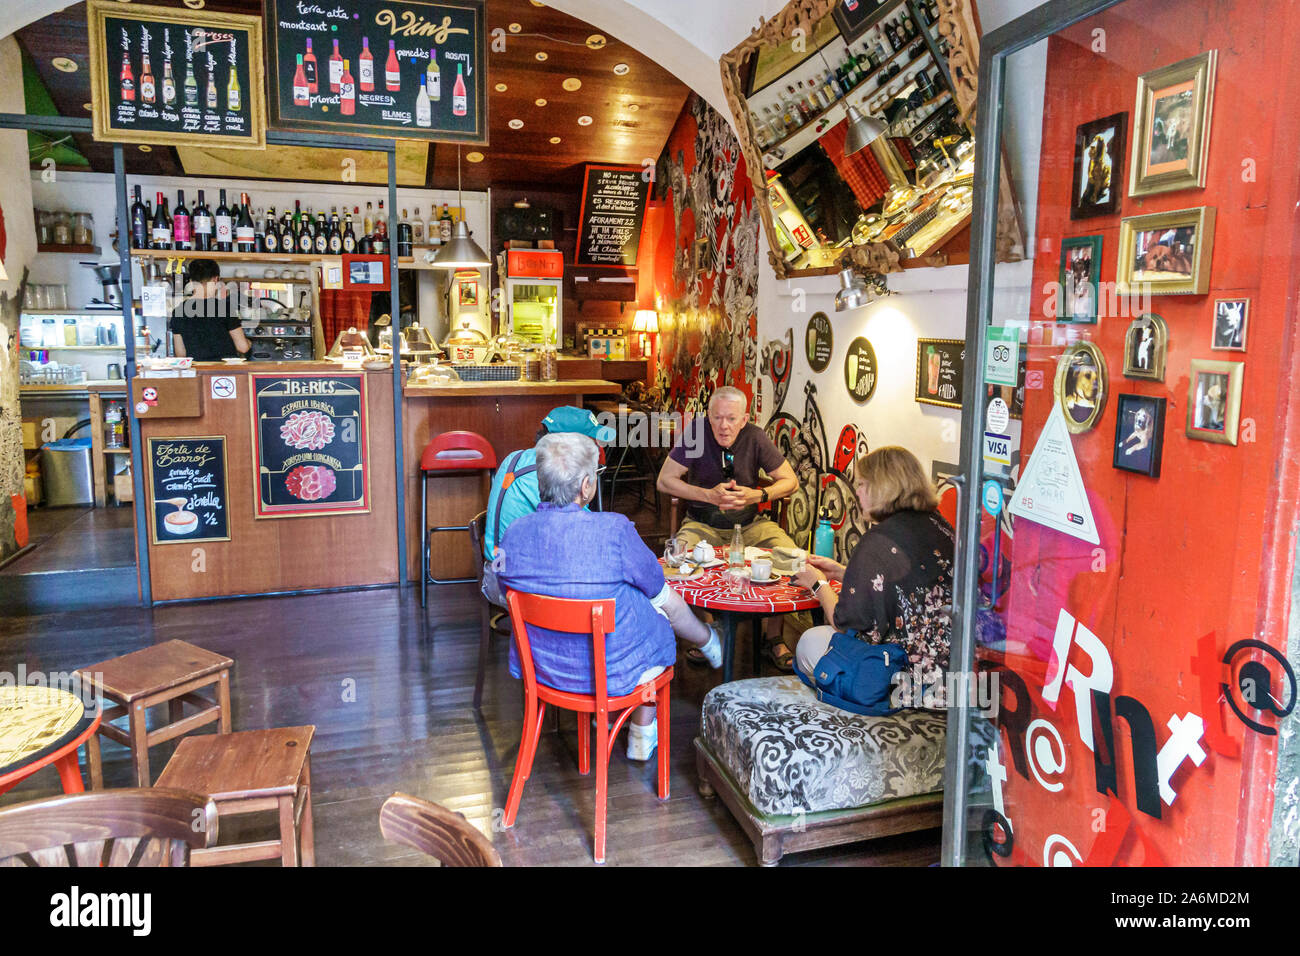 Barcelona Spain,Catalonia Ciutat Vella,El Born,historic center,Bornet,internet cafe,artsy coffeehouse,inside,bar,man,woman,couple,senior,ES190903138 Stock Photo